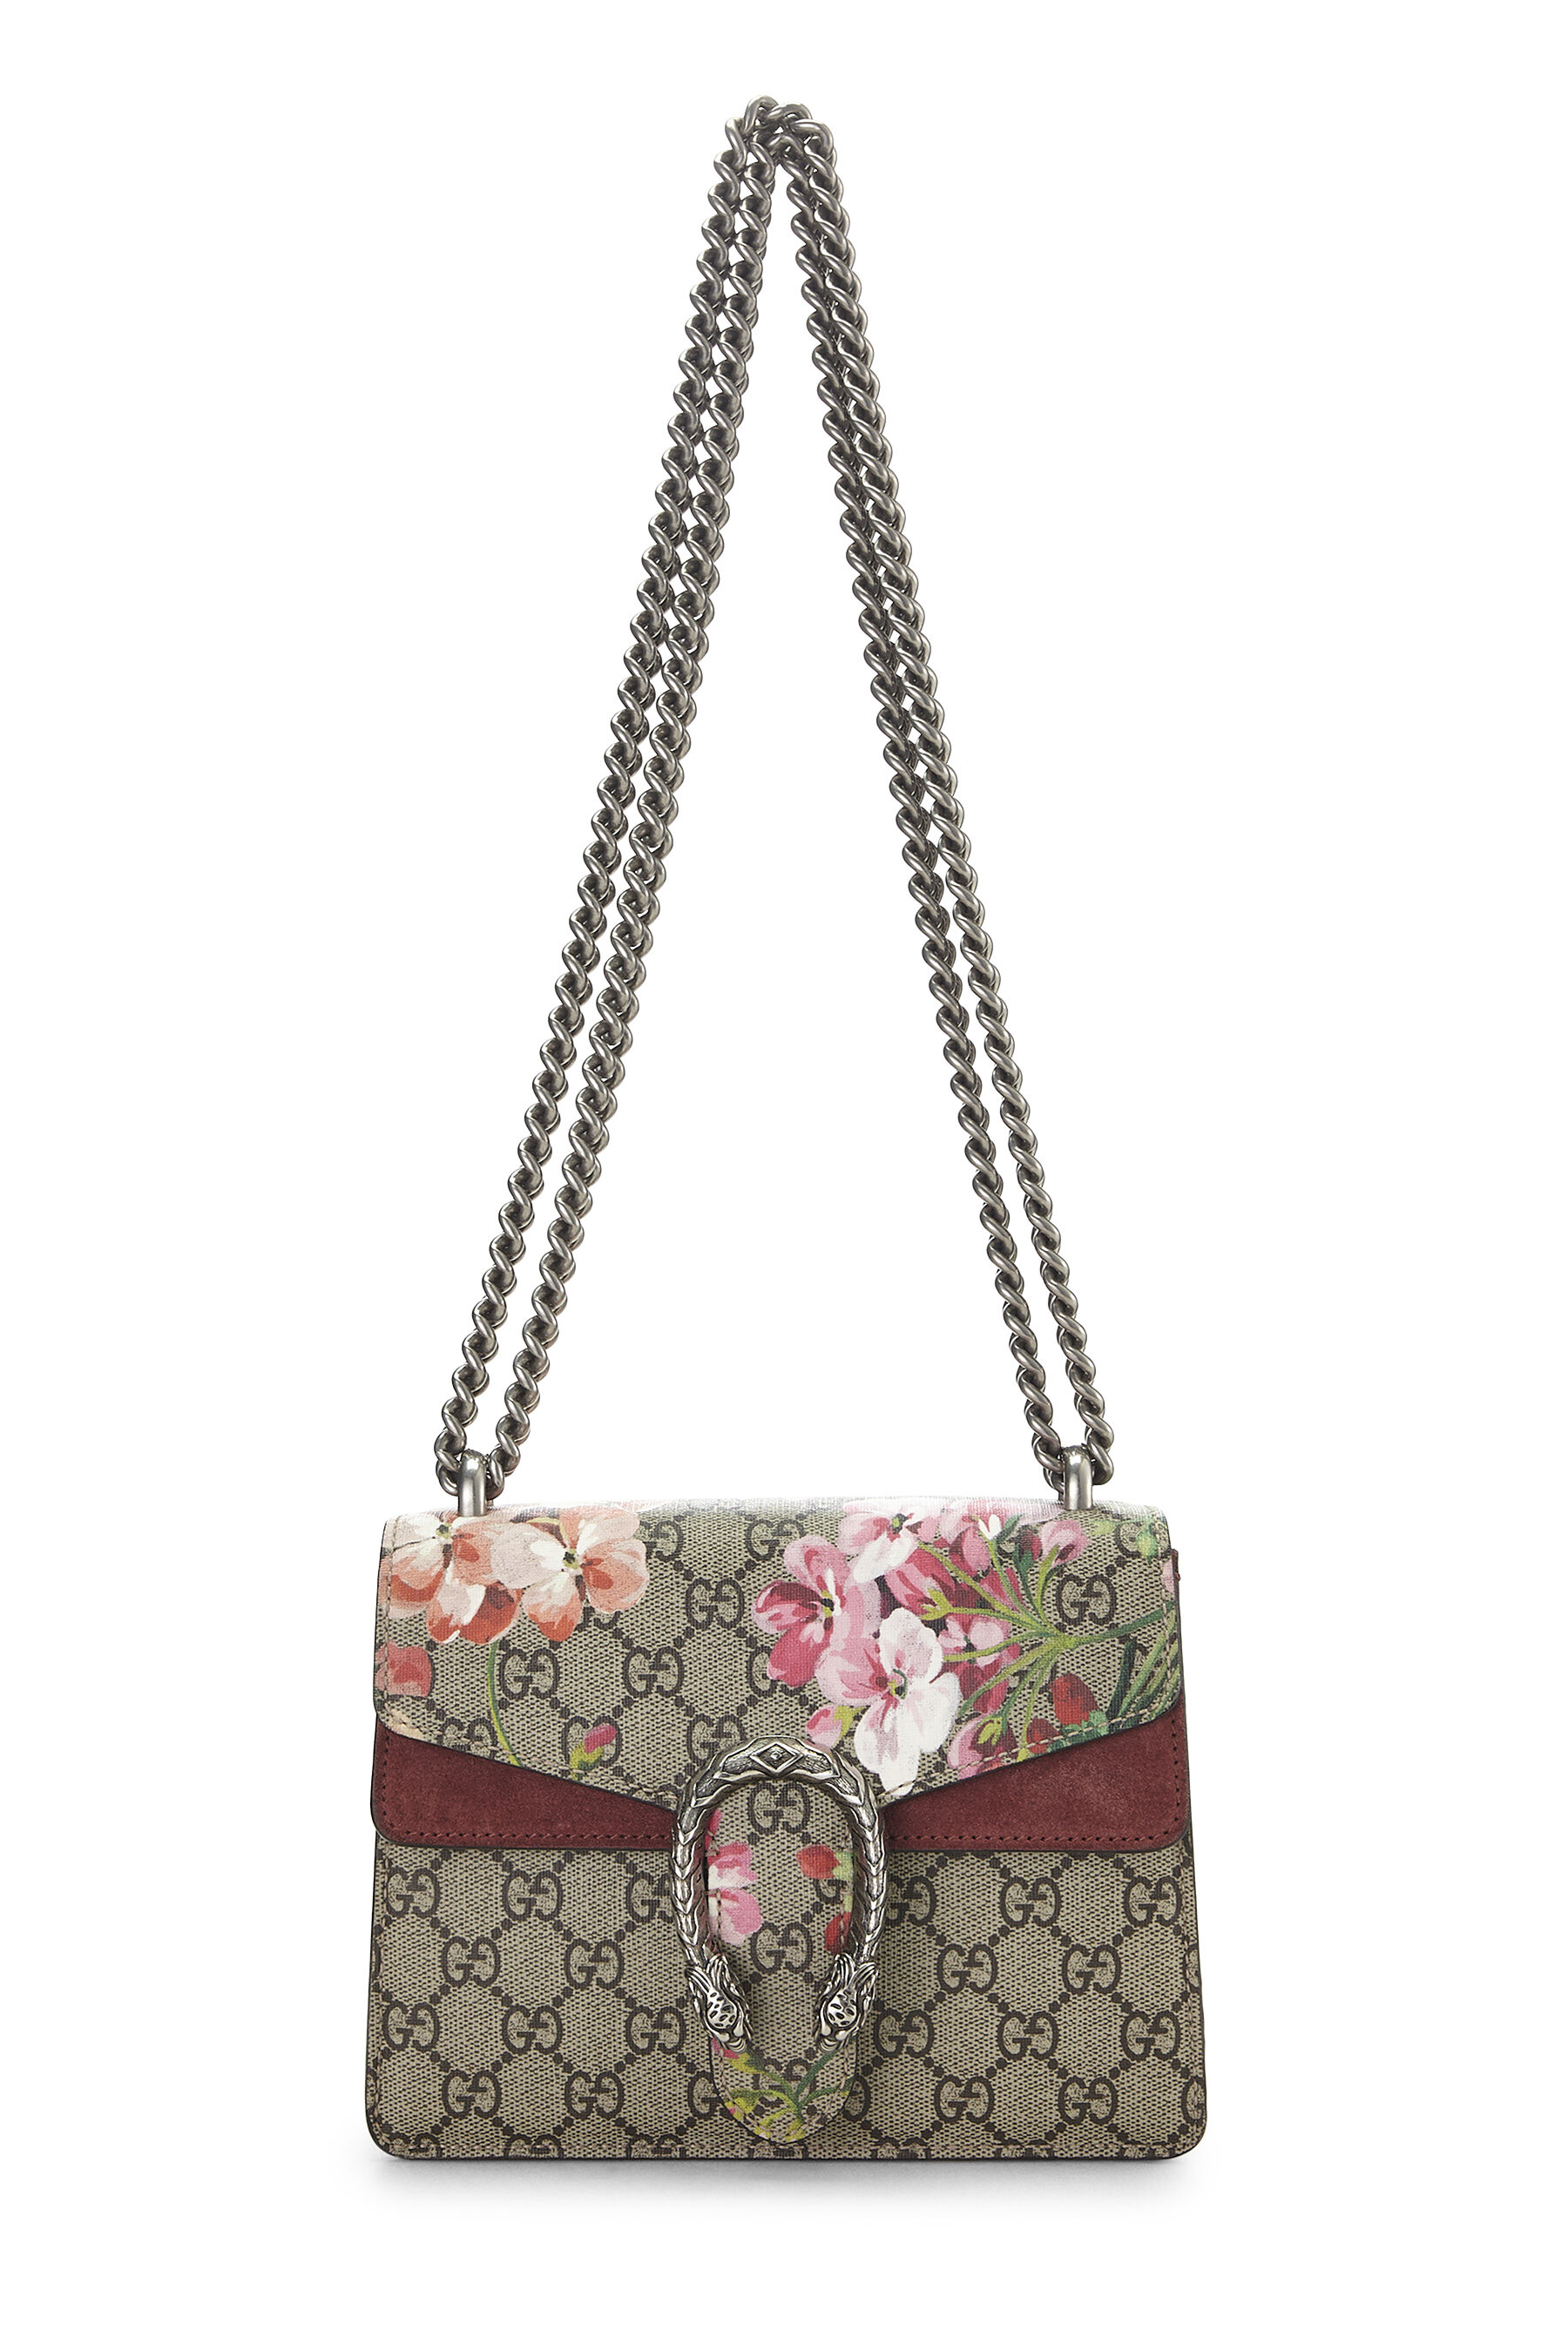 Gucci Pink GG Blooms Canvas Dionysus Shoulder Bag Mini